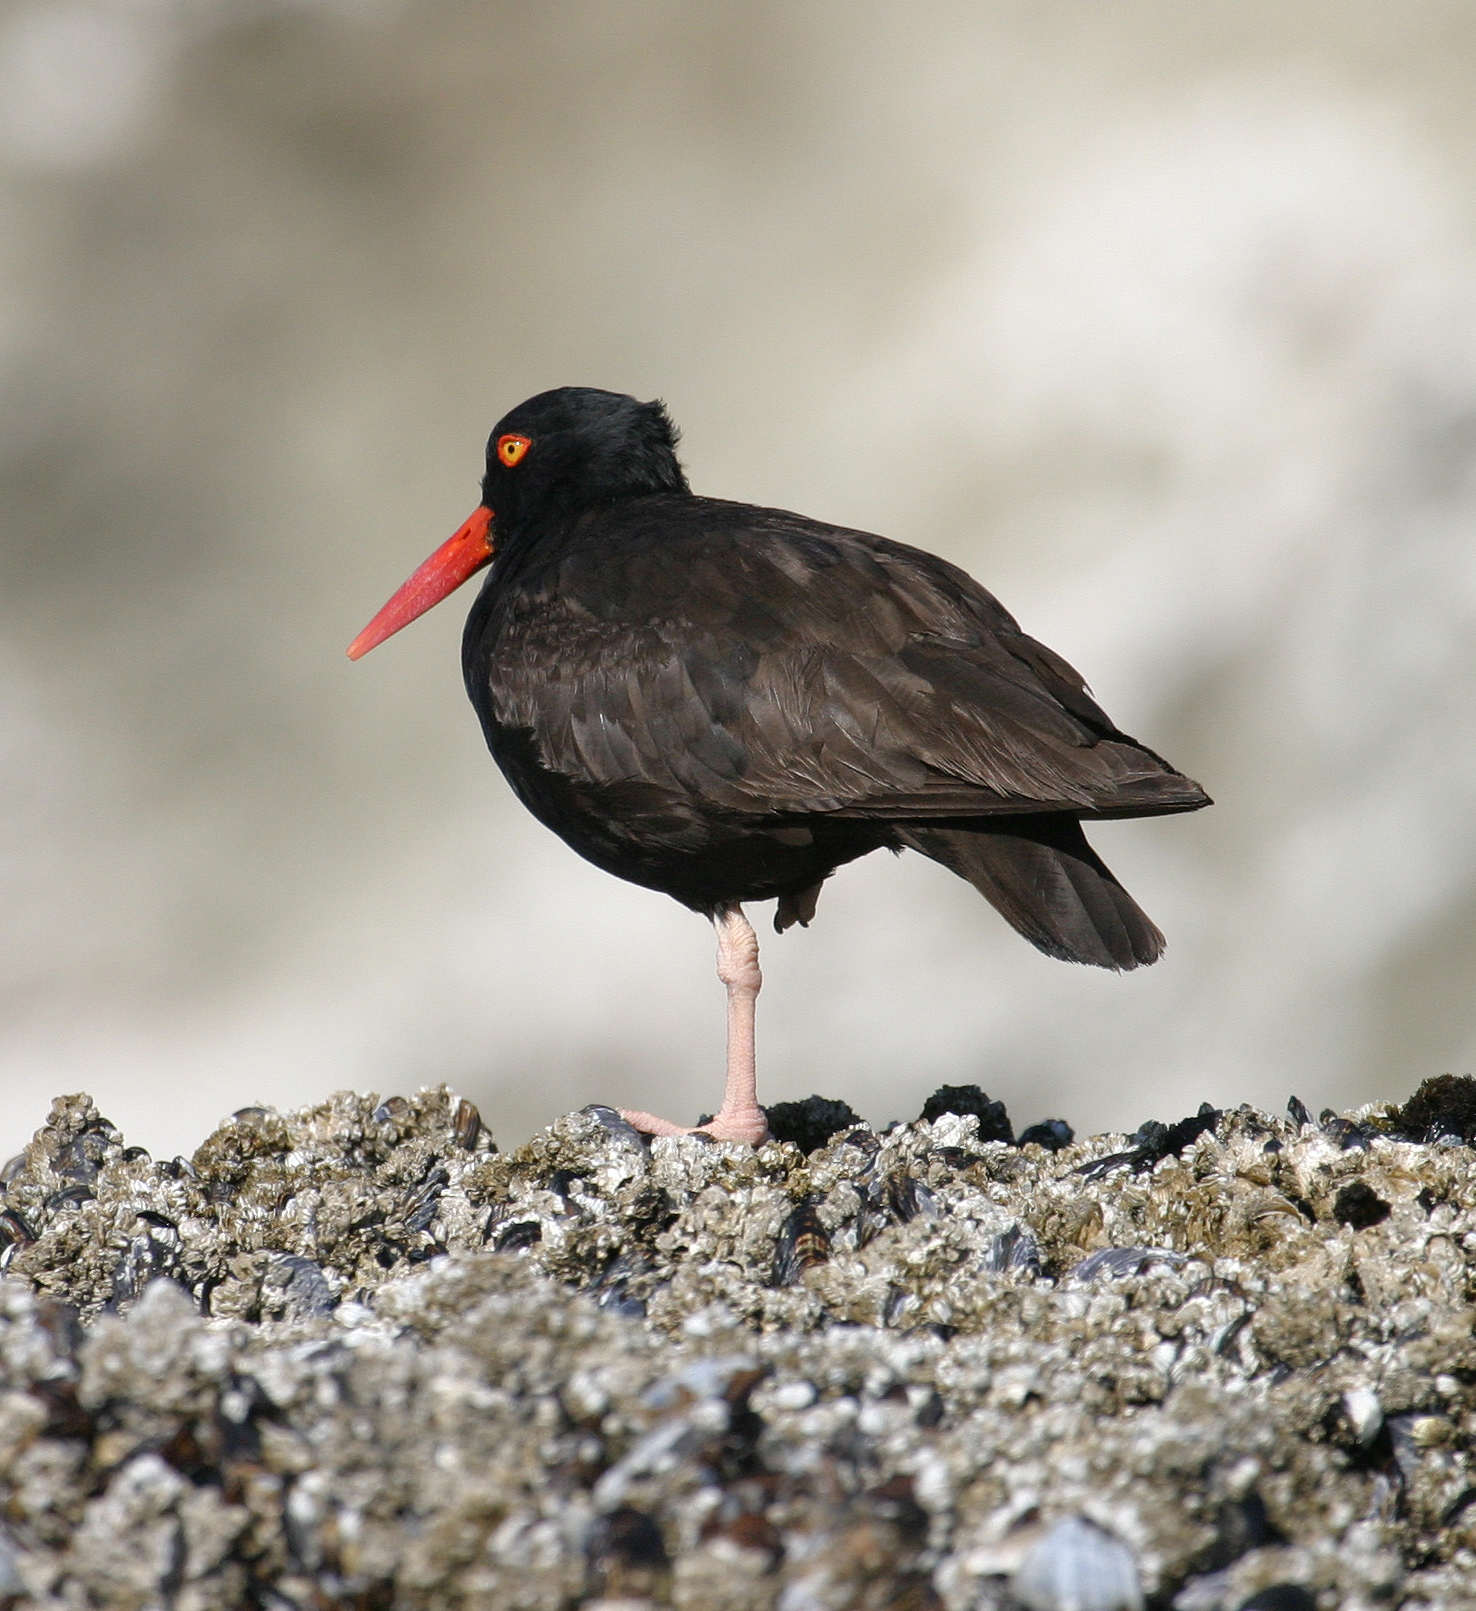 a black bird with orange beak on a rocky surface